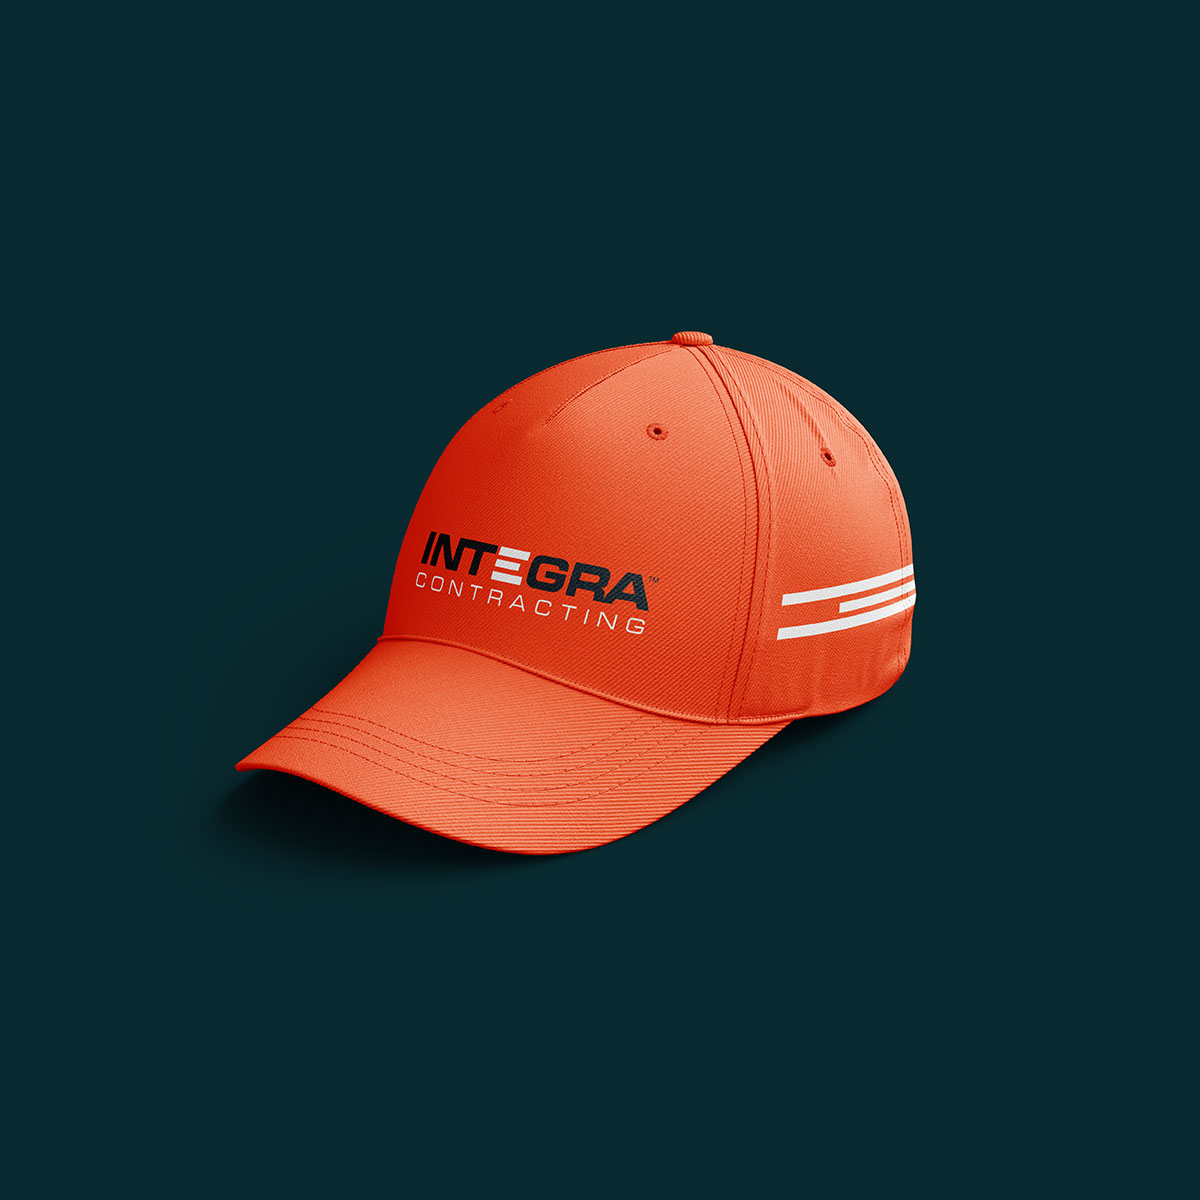 Integra branded hat design